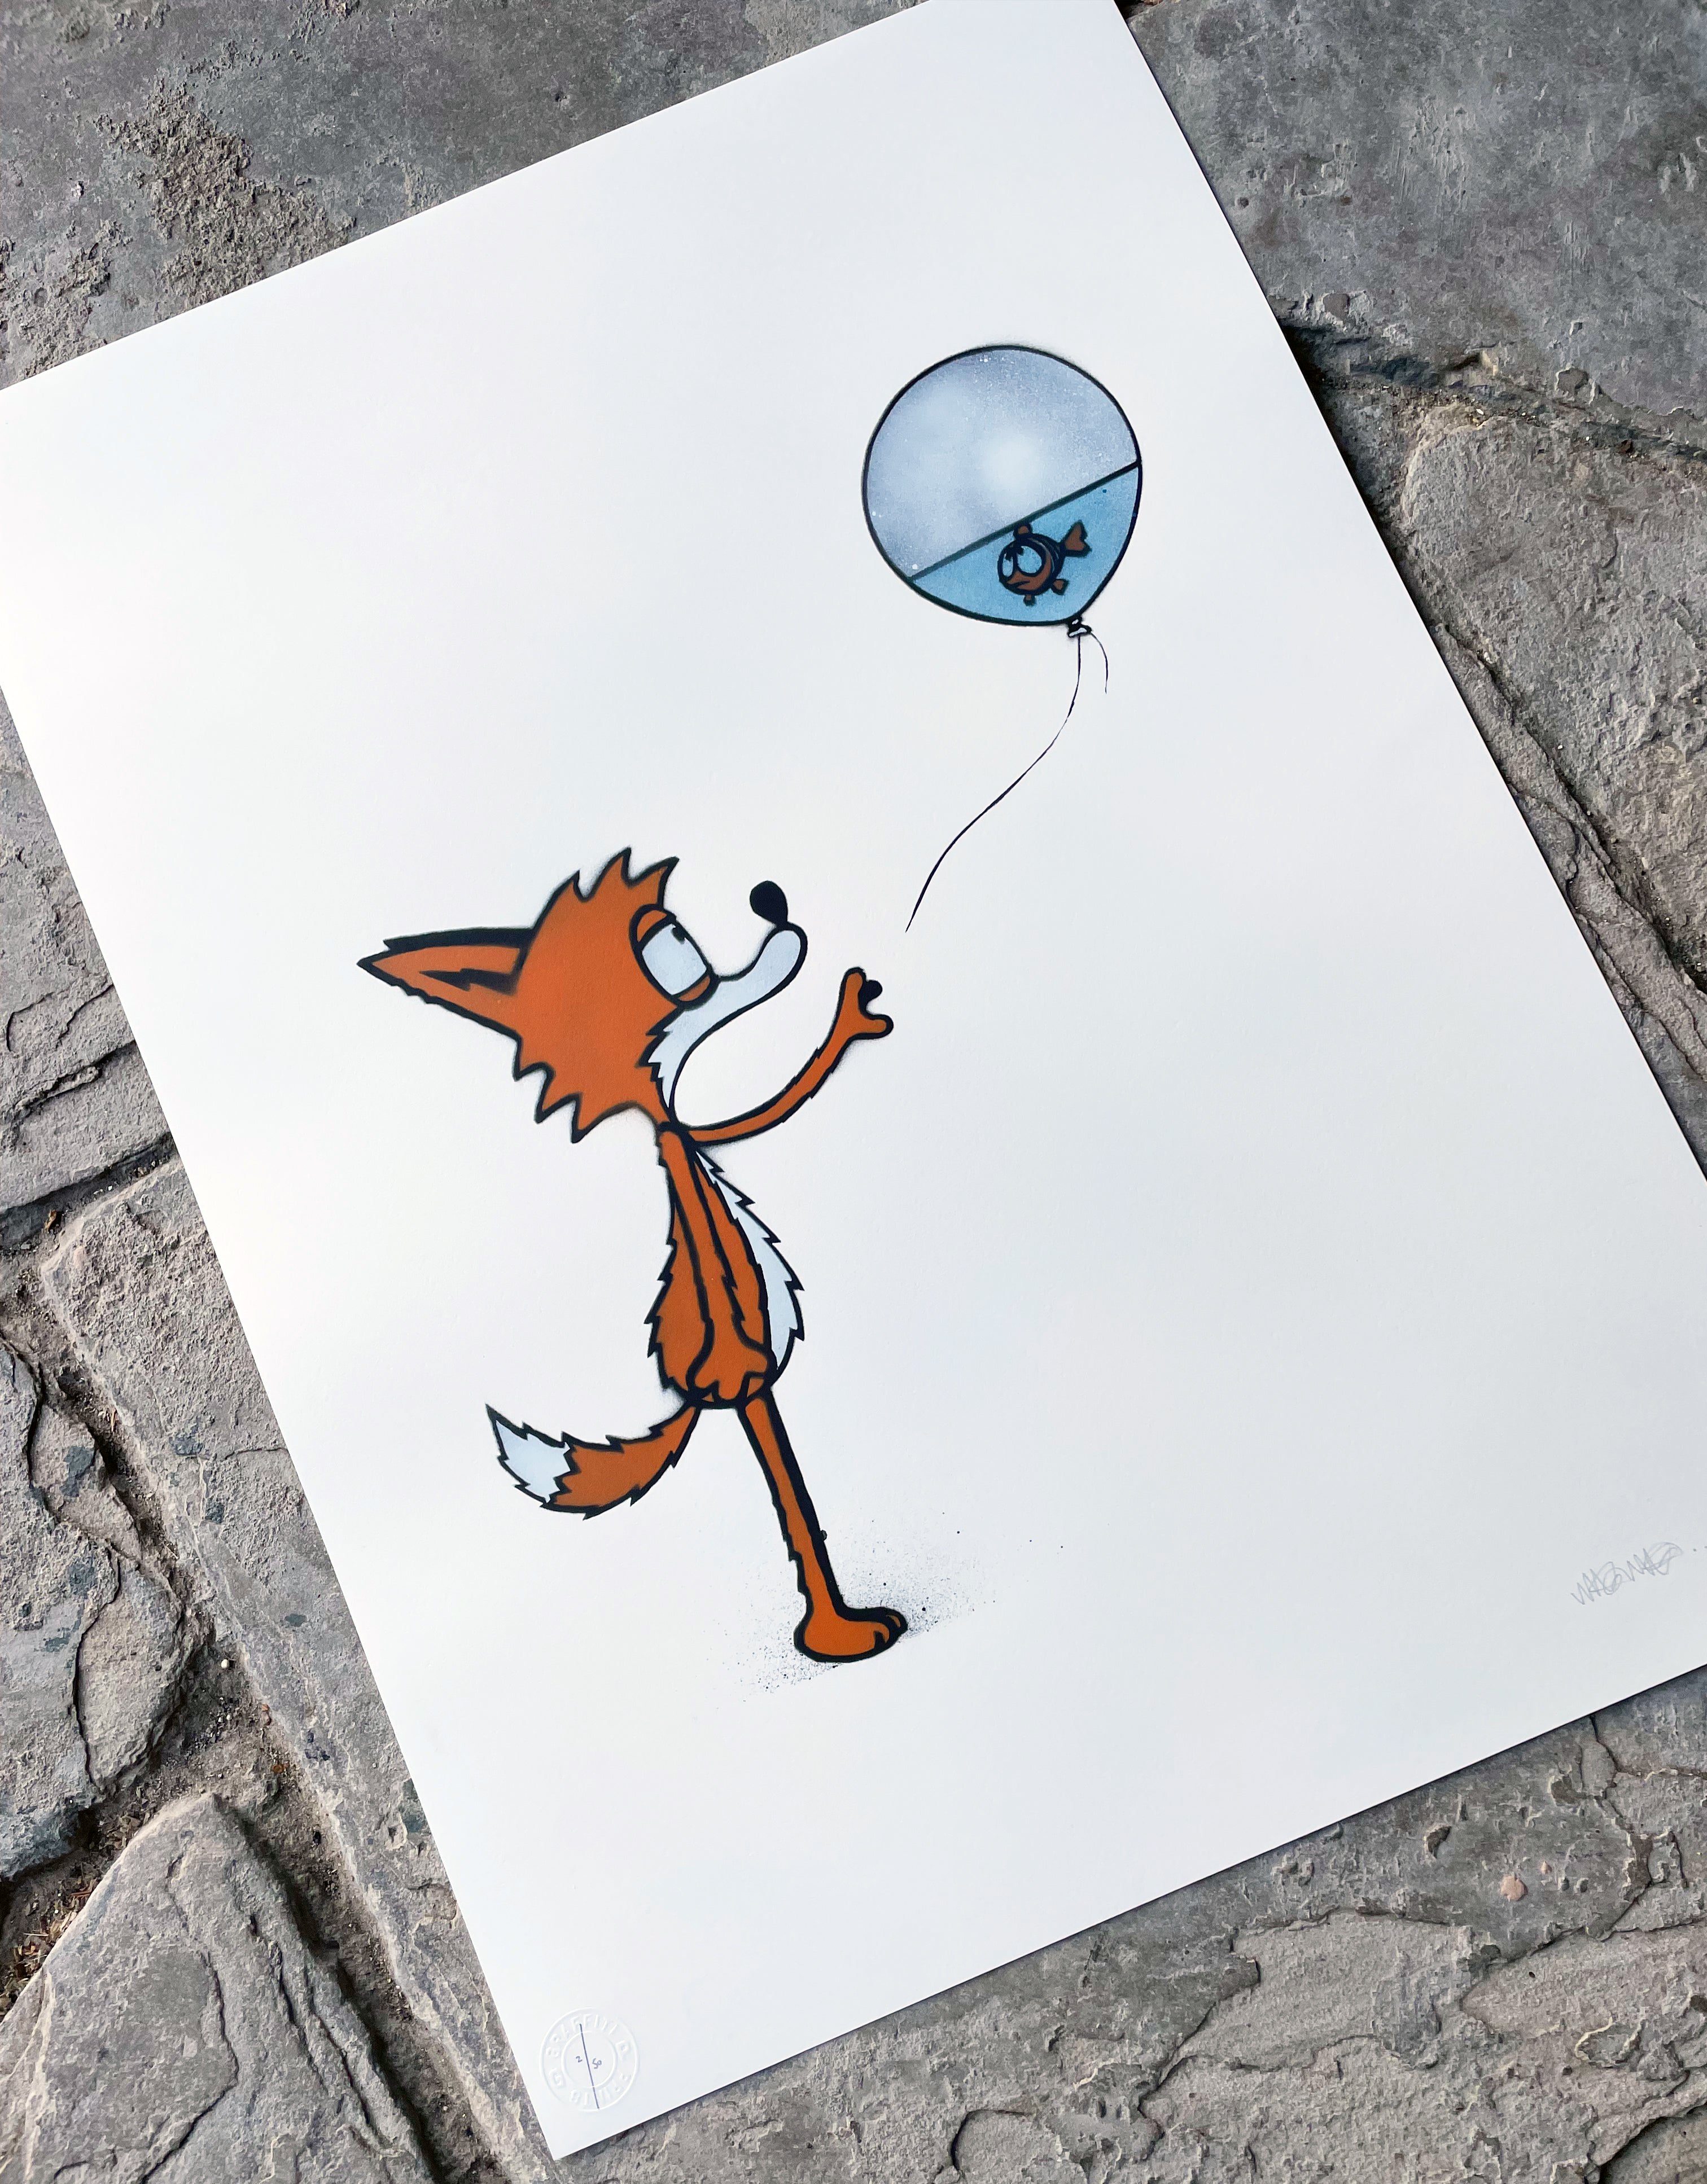 MAU MAU - Fox With Balloon - ORIGINAL ON PAPER, ed 50